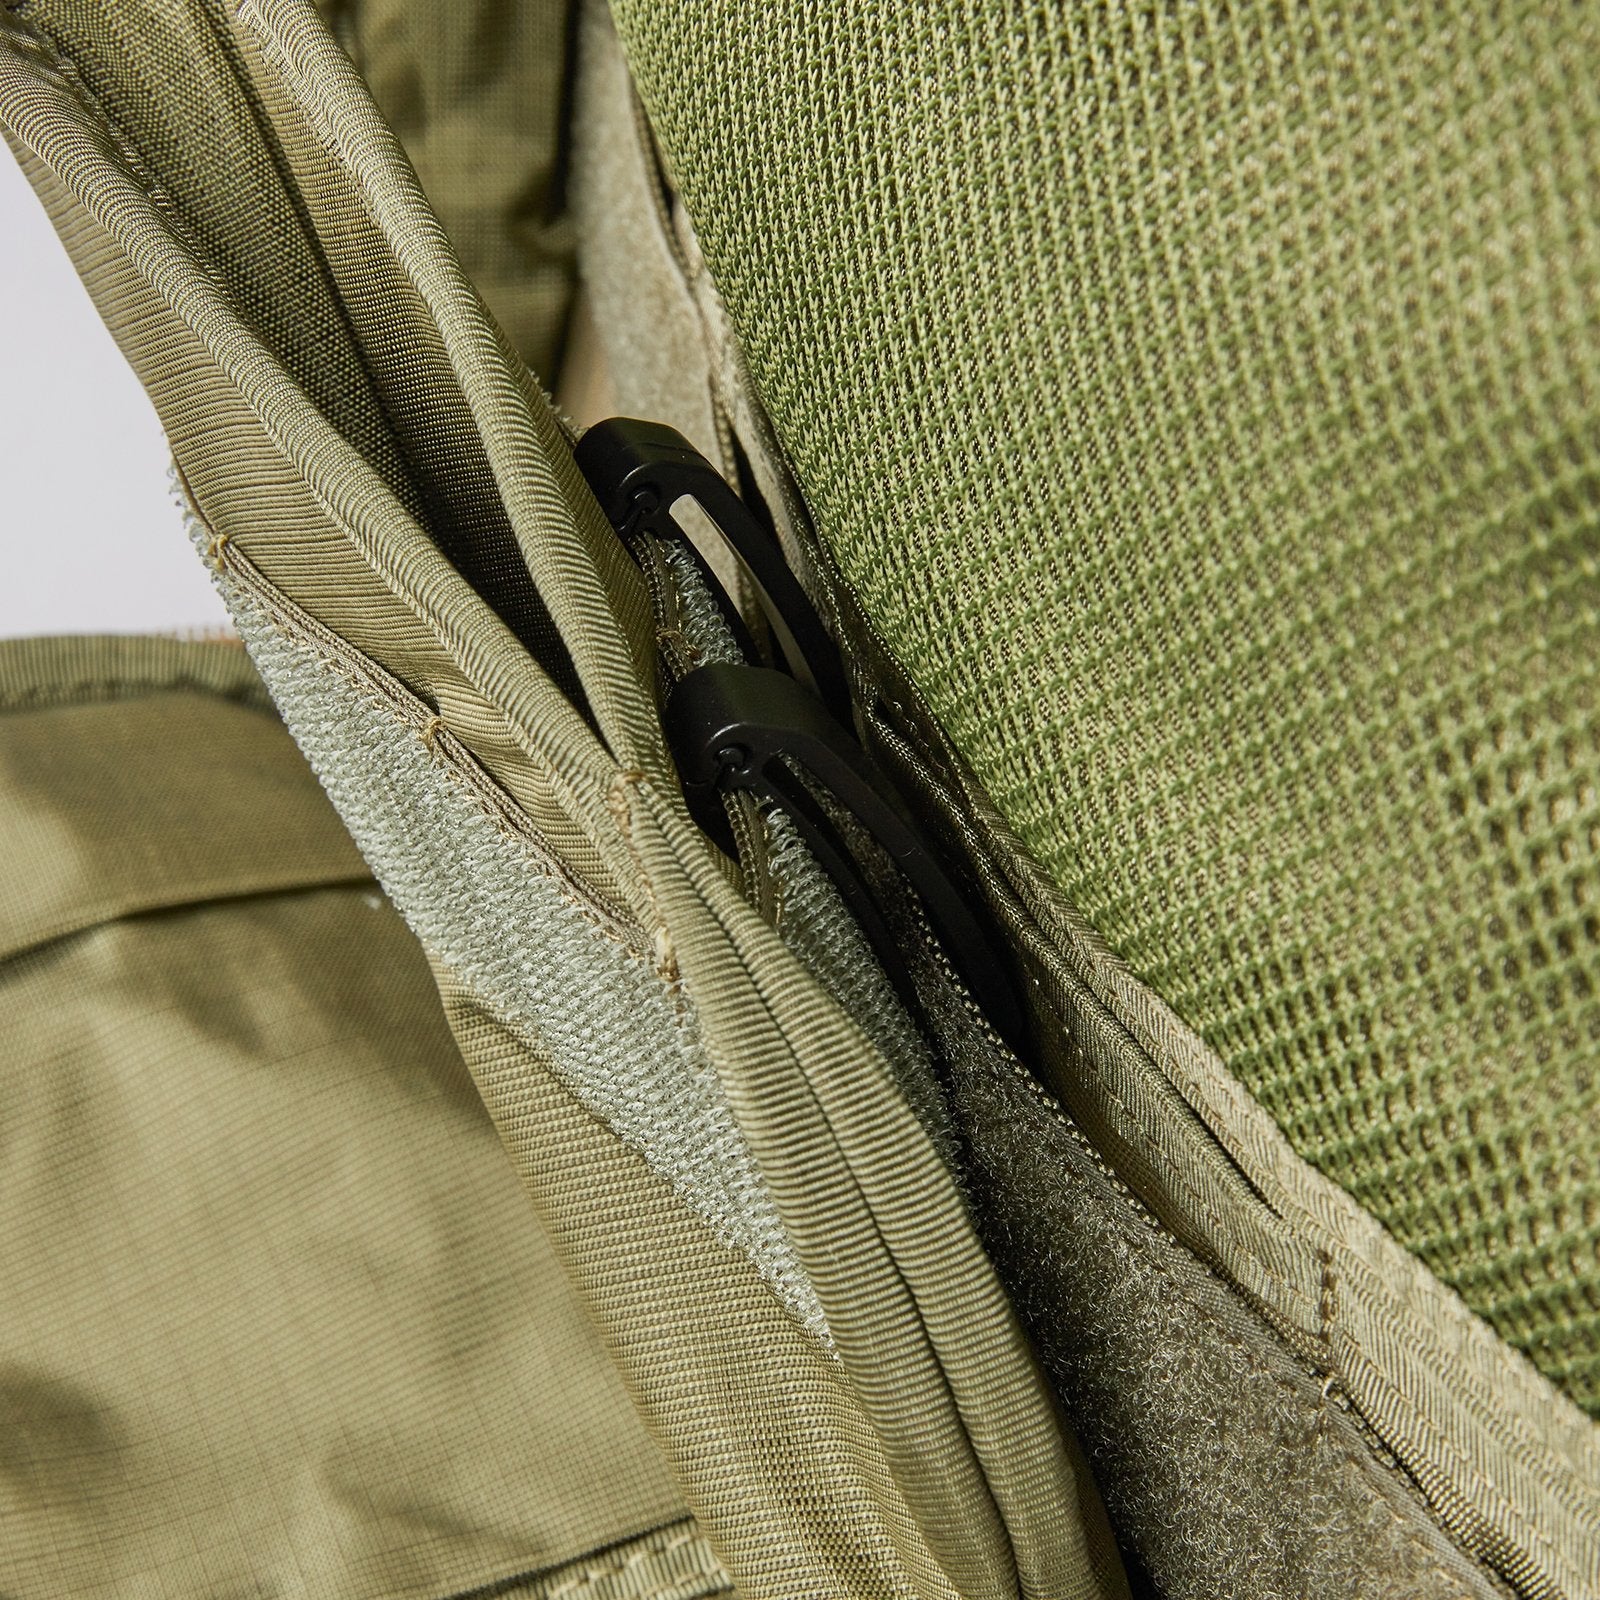 VIKTOS Perimeter 40L Backpack MultiCam Black Bags, Packs and Cases VIKTOS Tactical Gear Supplier Tactical Distributors Australia